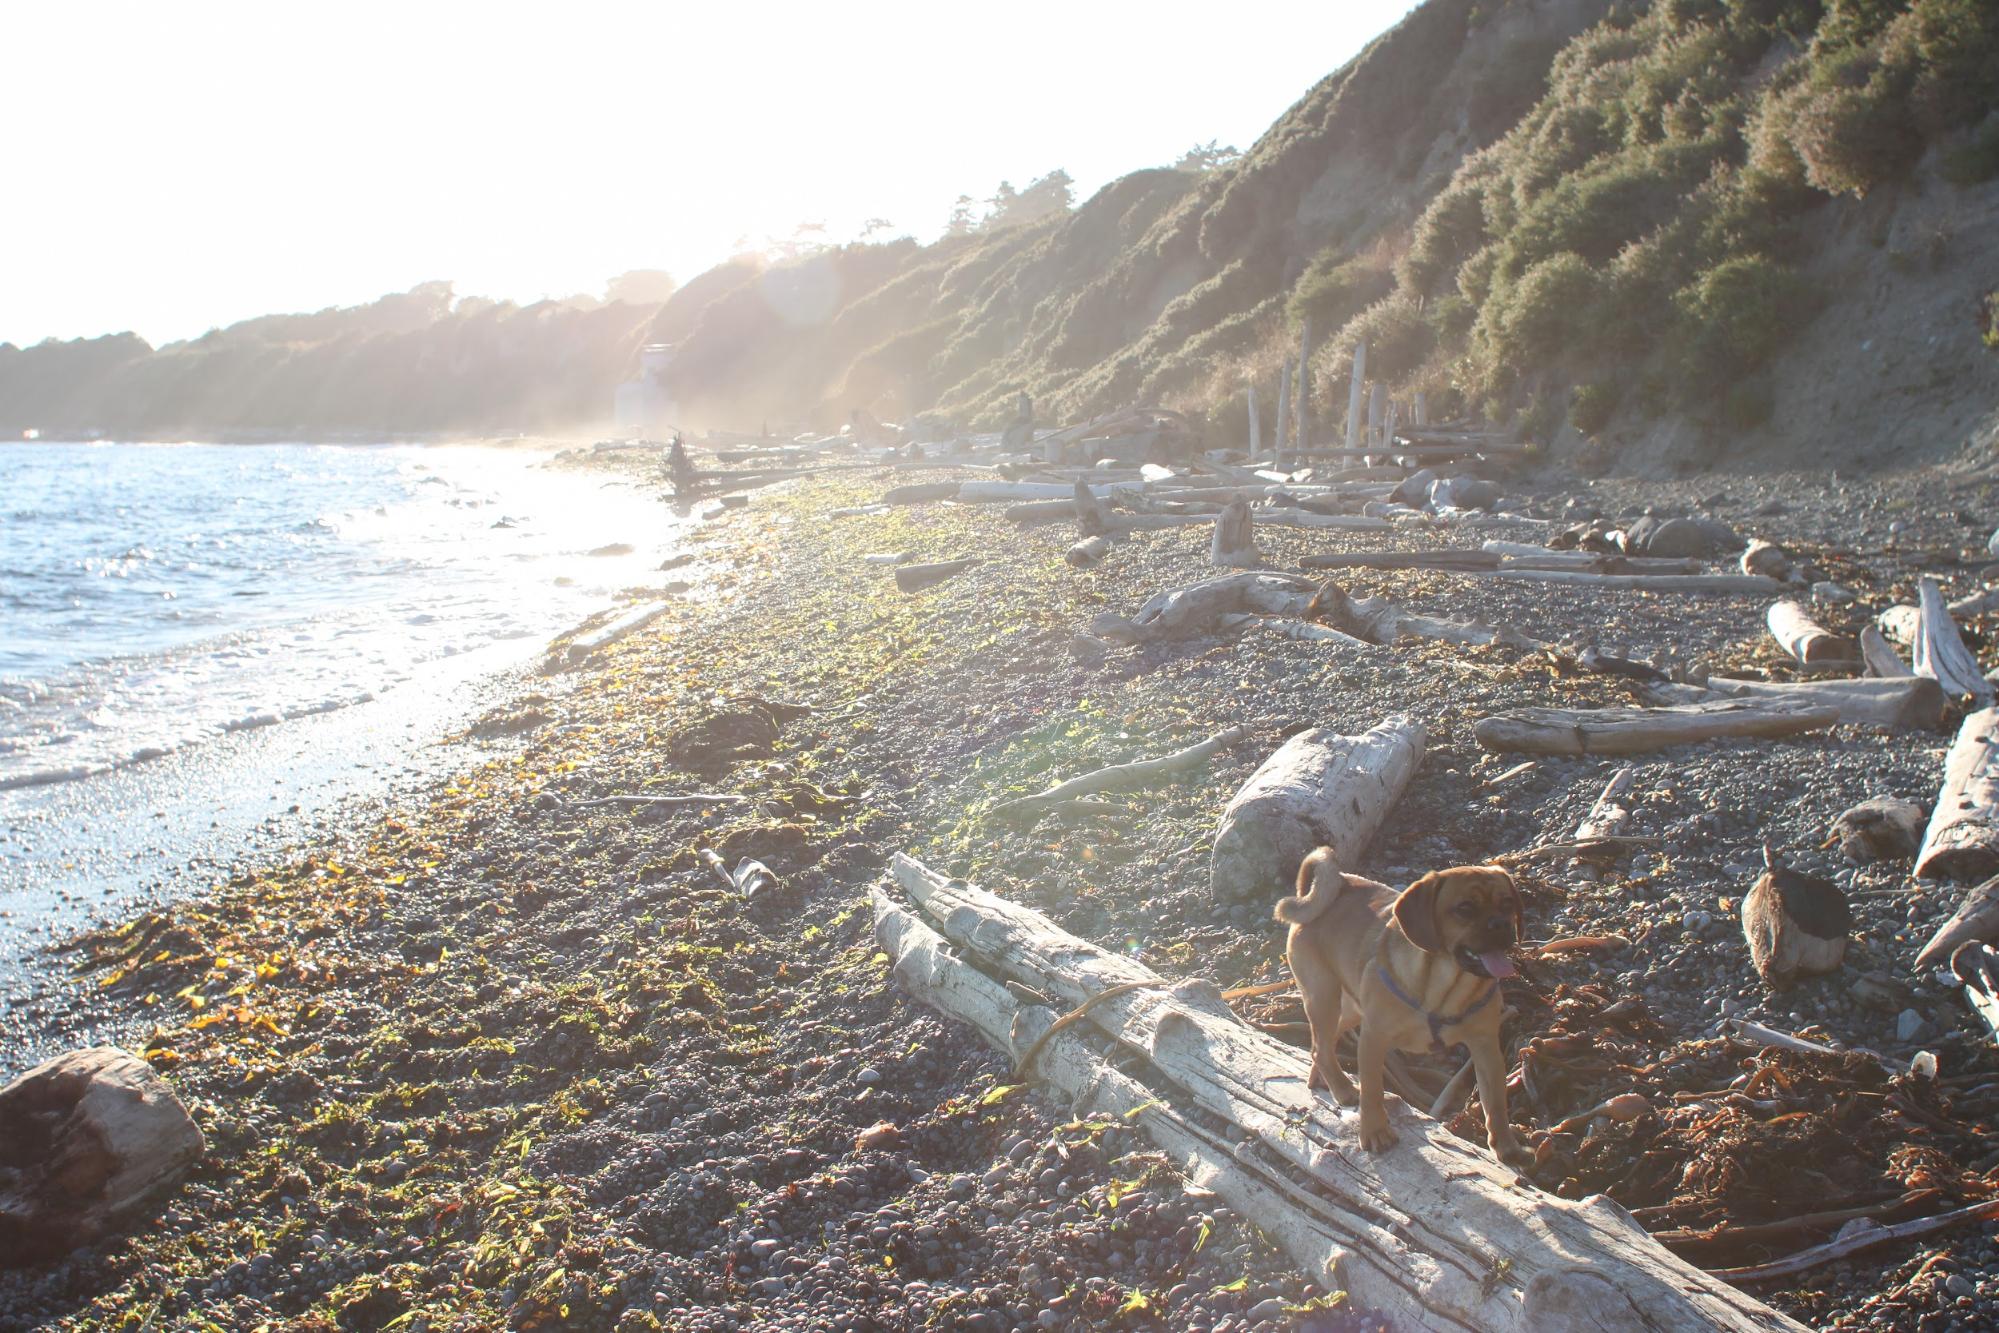 A happy dog walks across a piece of driftwood on a sandy beach.